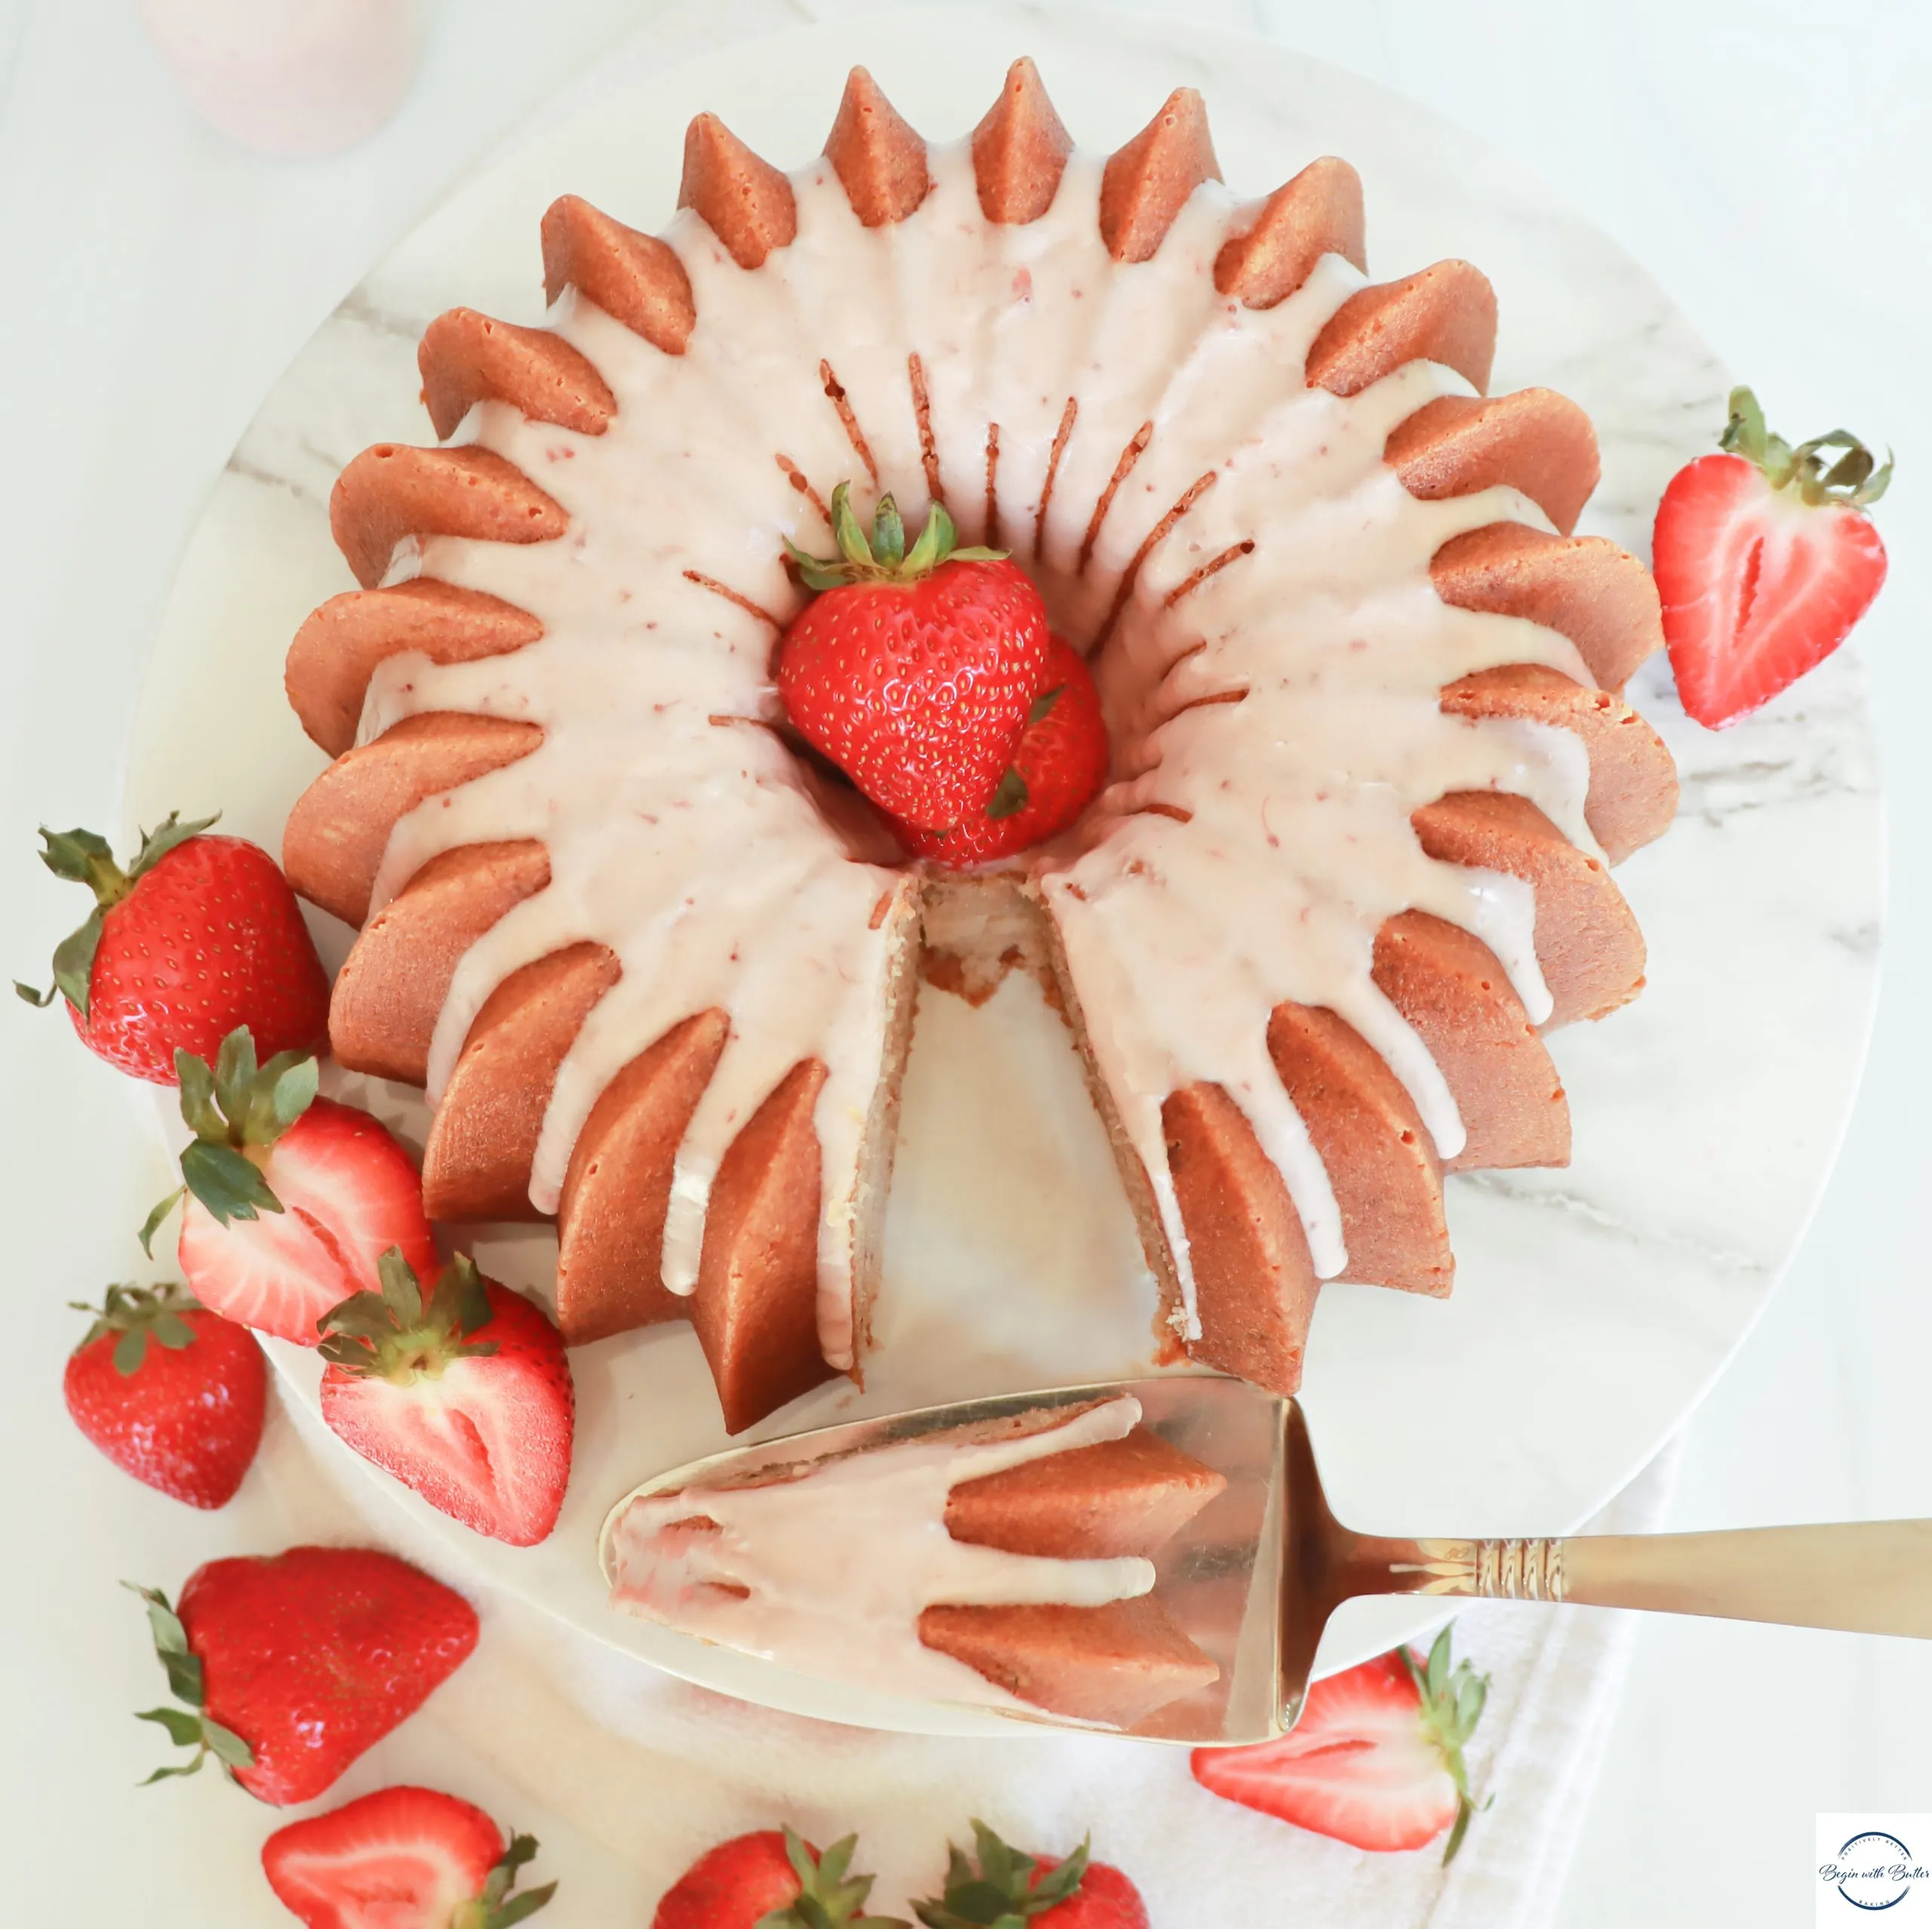 strawberry pound cake